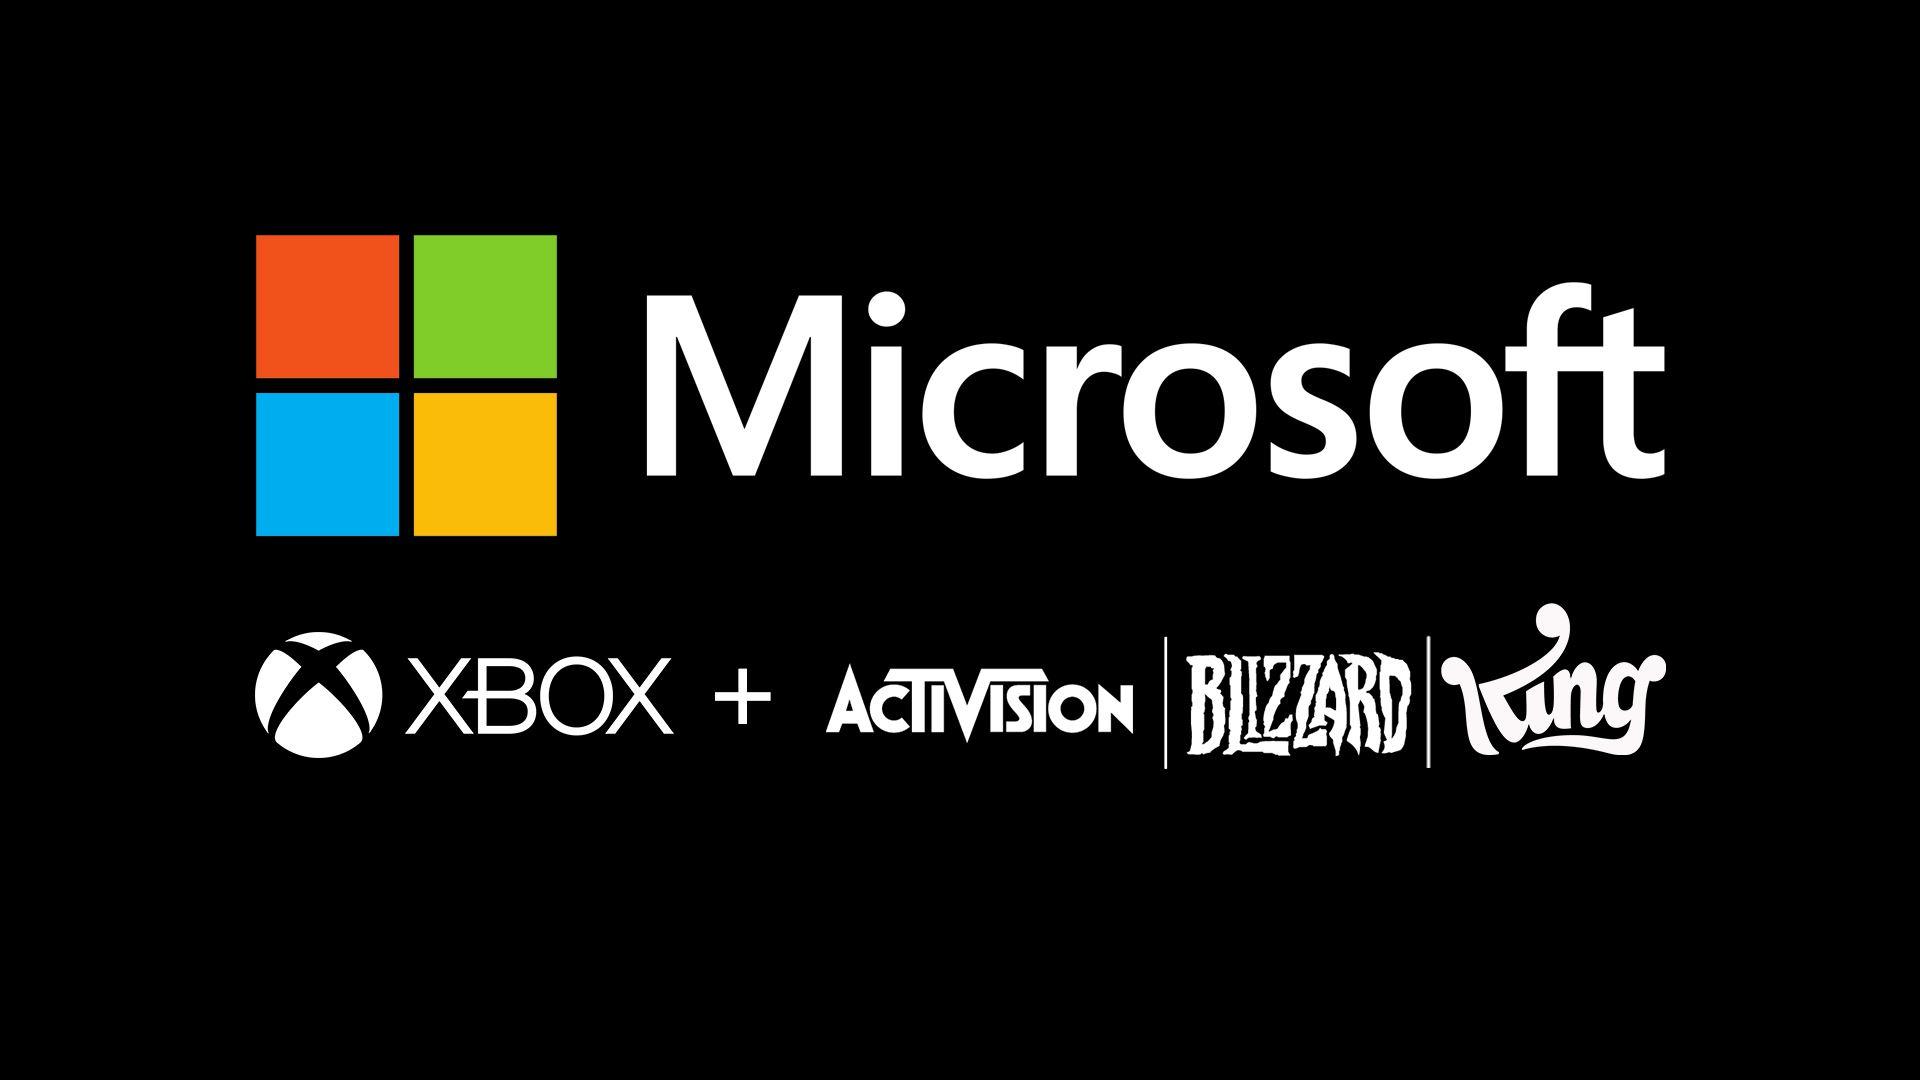 Microsoft ซื้อ Activision Blizzard ส่งผลอย่างไรต่อวงการเกม?